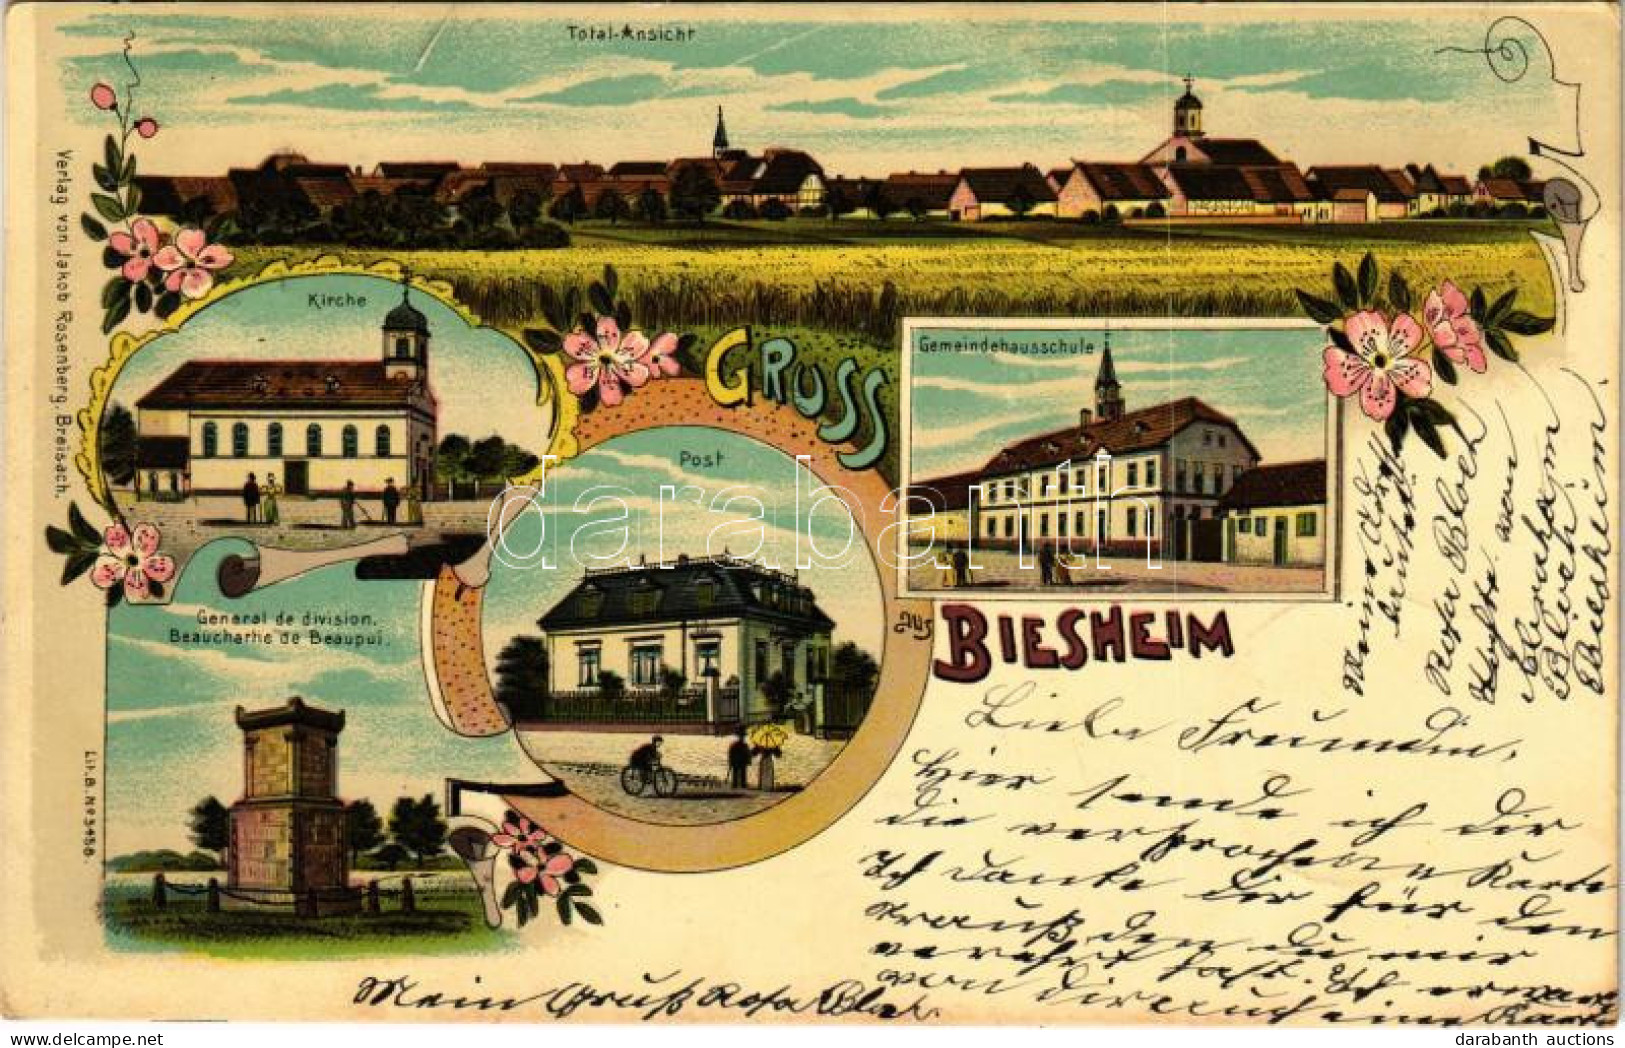 T2/T3 1903 Biesheim, Biese; General De Division. Beauchartie De Beaupui, Kirche, Post, Total Ansicht, Gemeindehausschule - Non Classificati